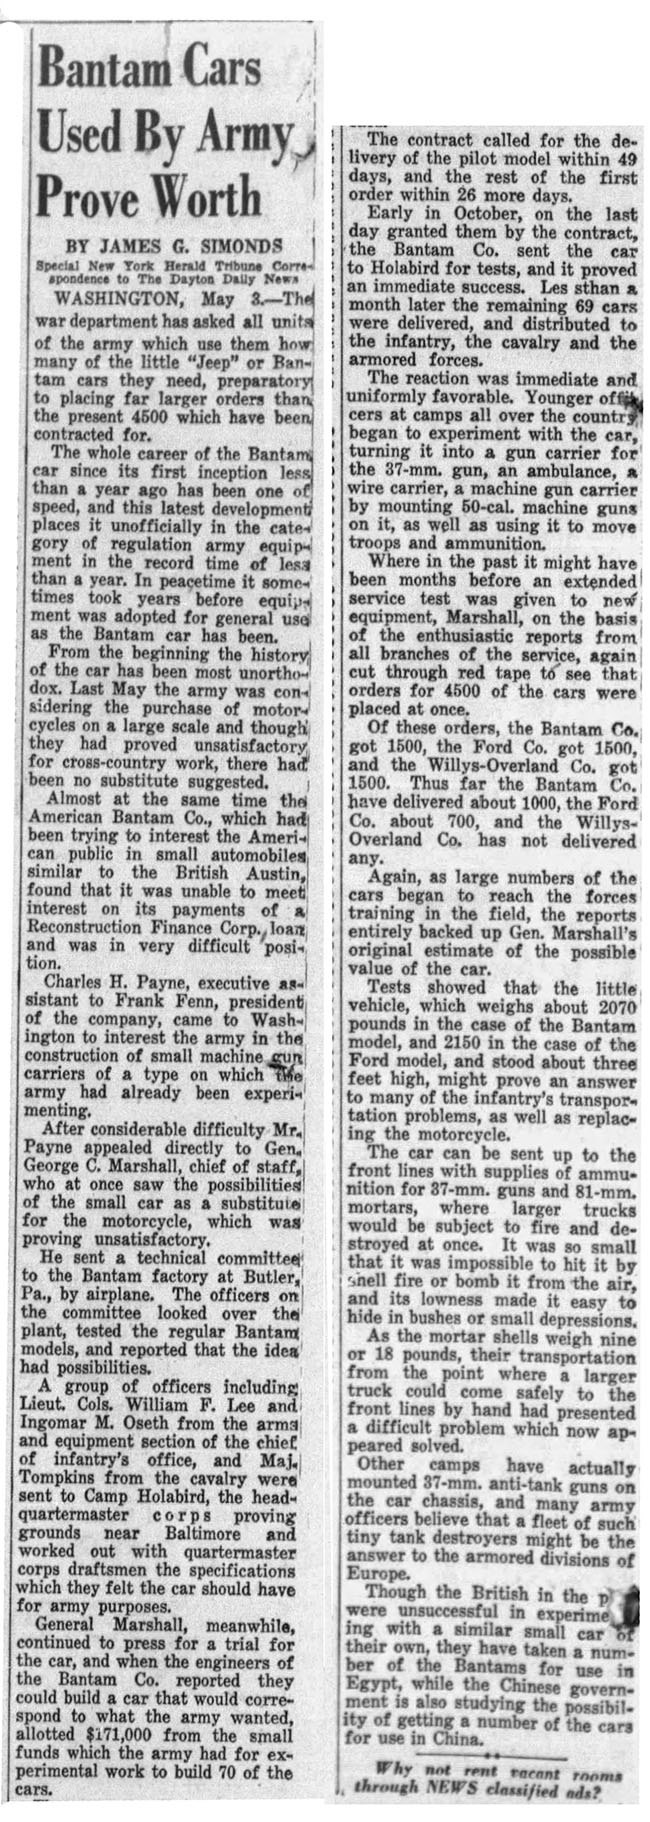 1941-05-04-dayton-daily-news-bantm-cars-prove-worth-lores